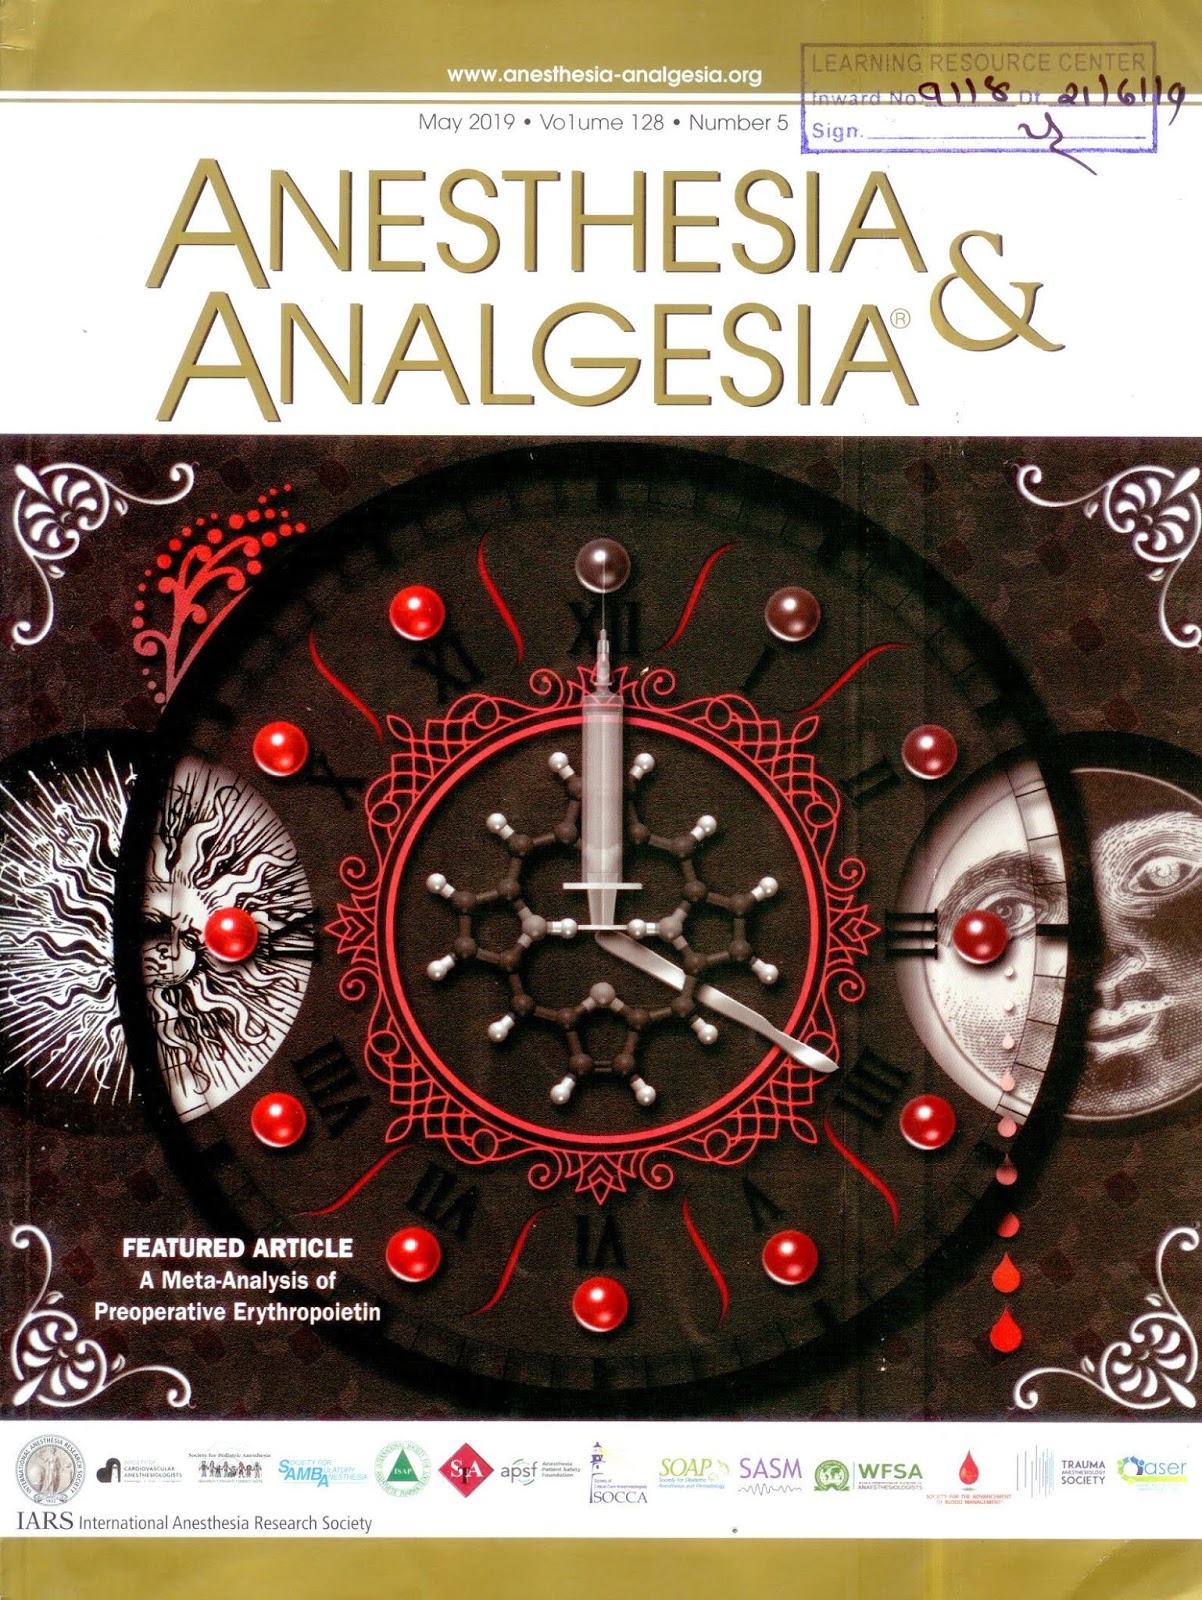 https://journals.lww.com/anesthesia-analgesia/toc/2019/05000